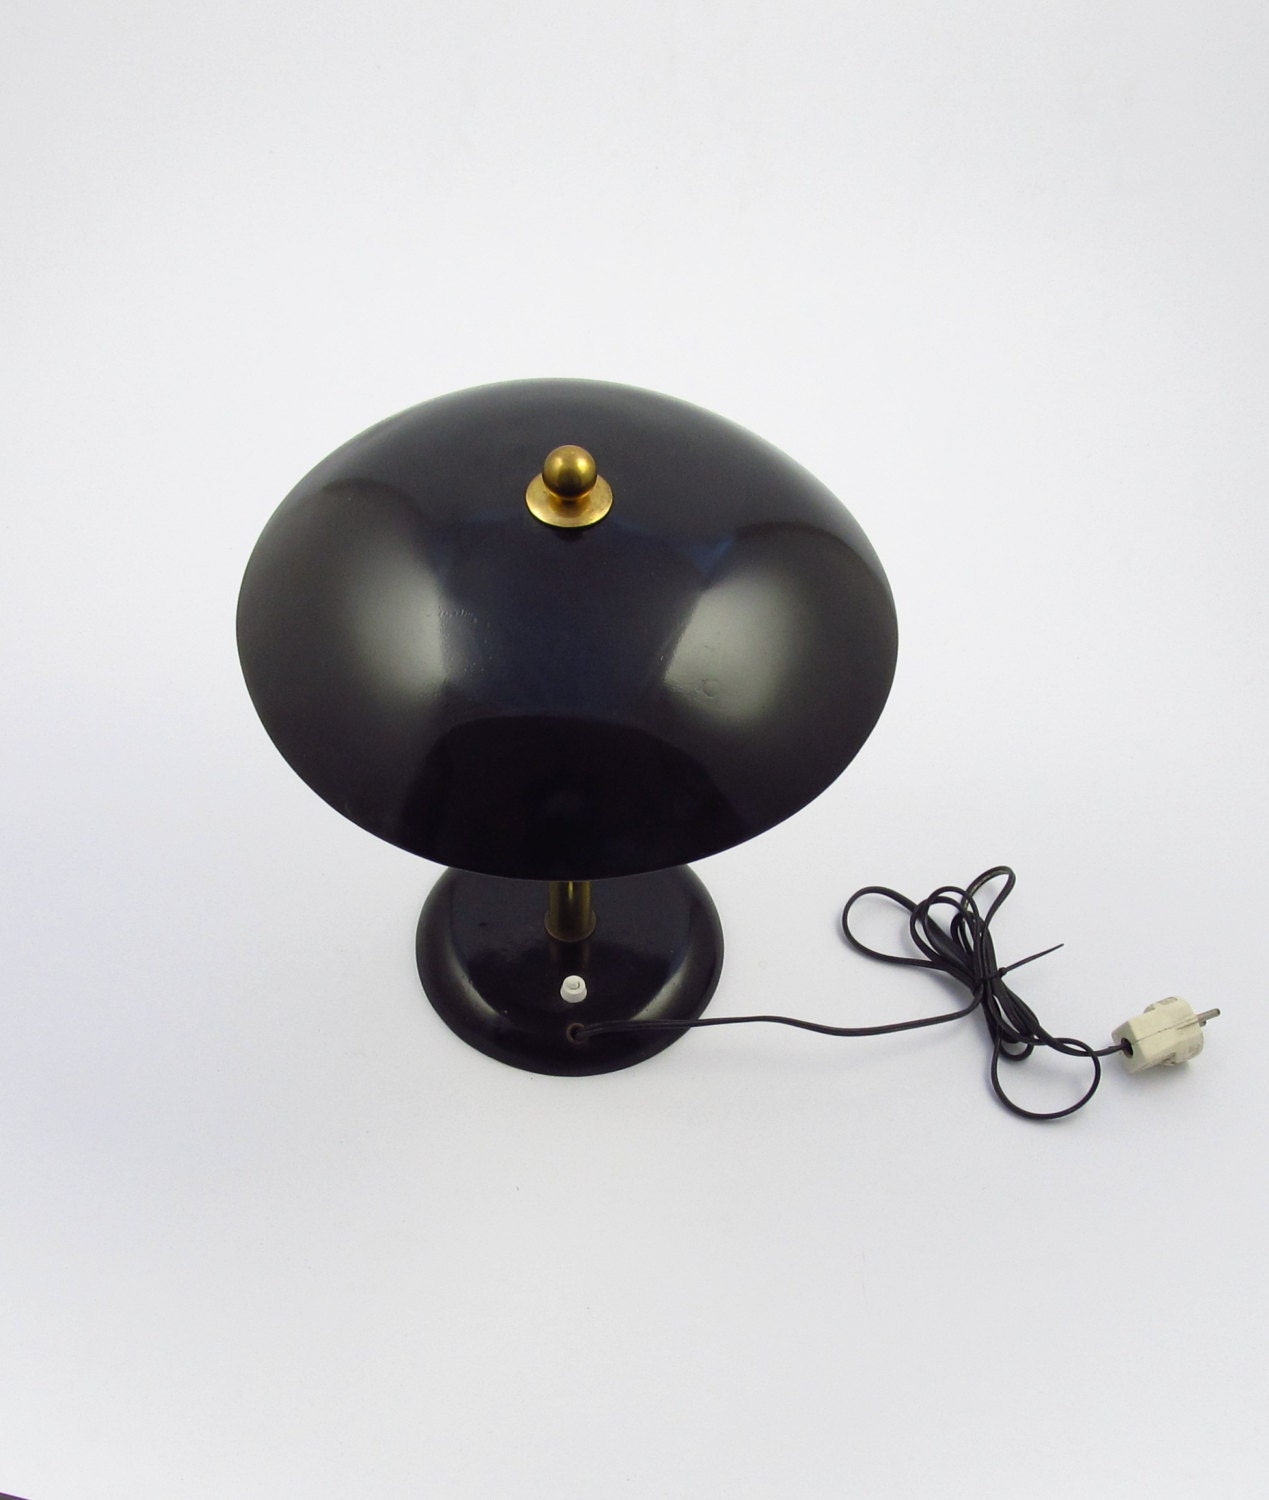 Art deco table lamp, heavy black metal desklamp from the artdeco era